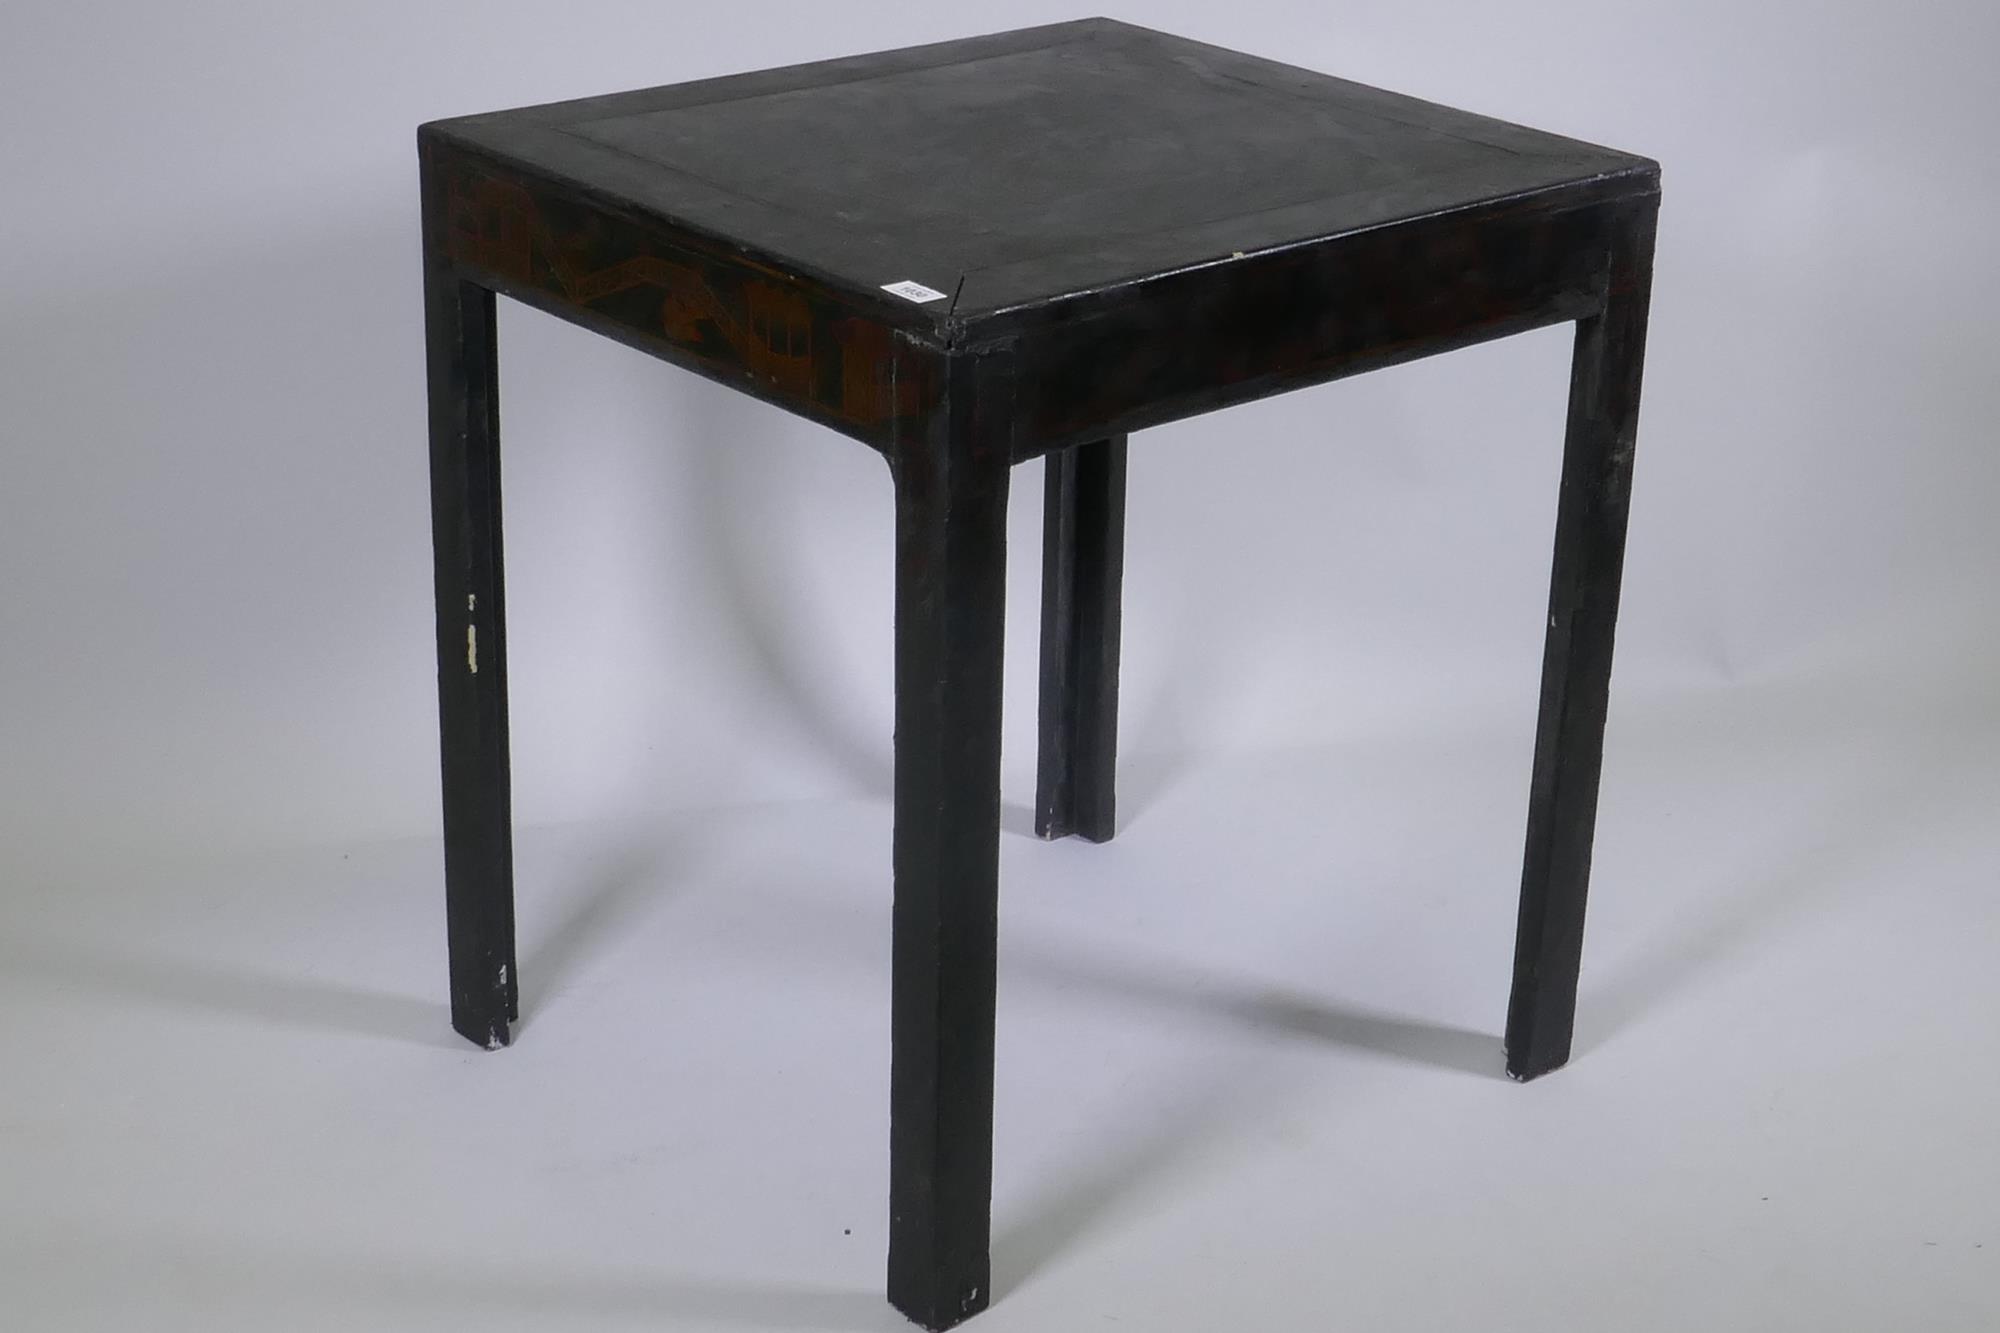 An antique black lacquer chinoiserie table, 63 x 63cm, 70cm high